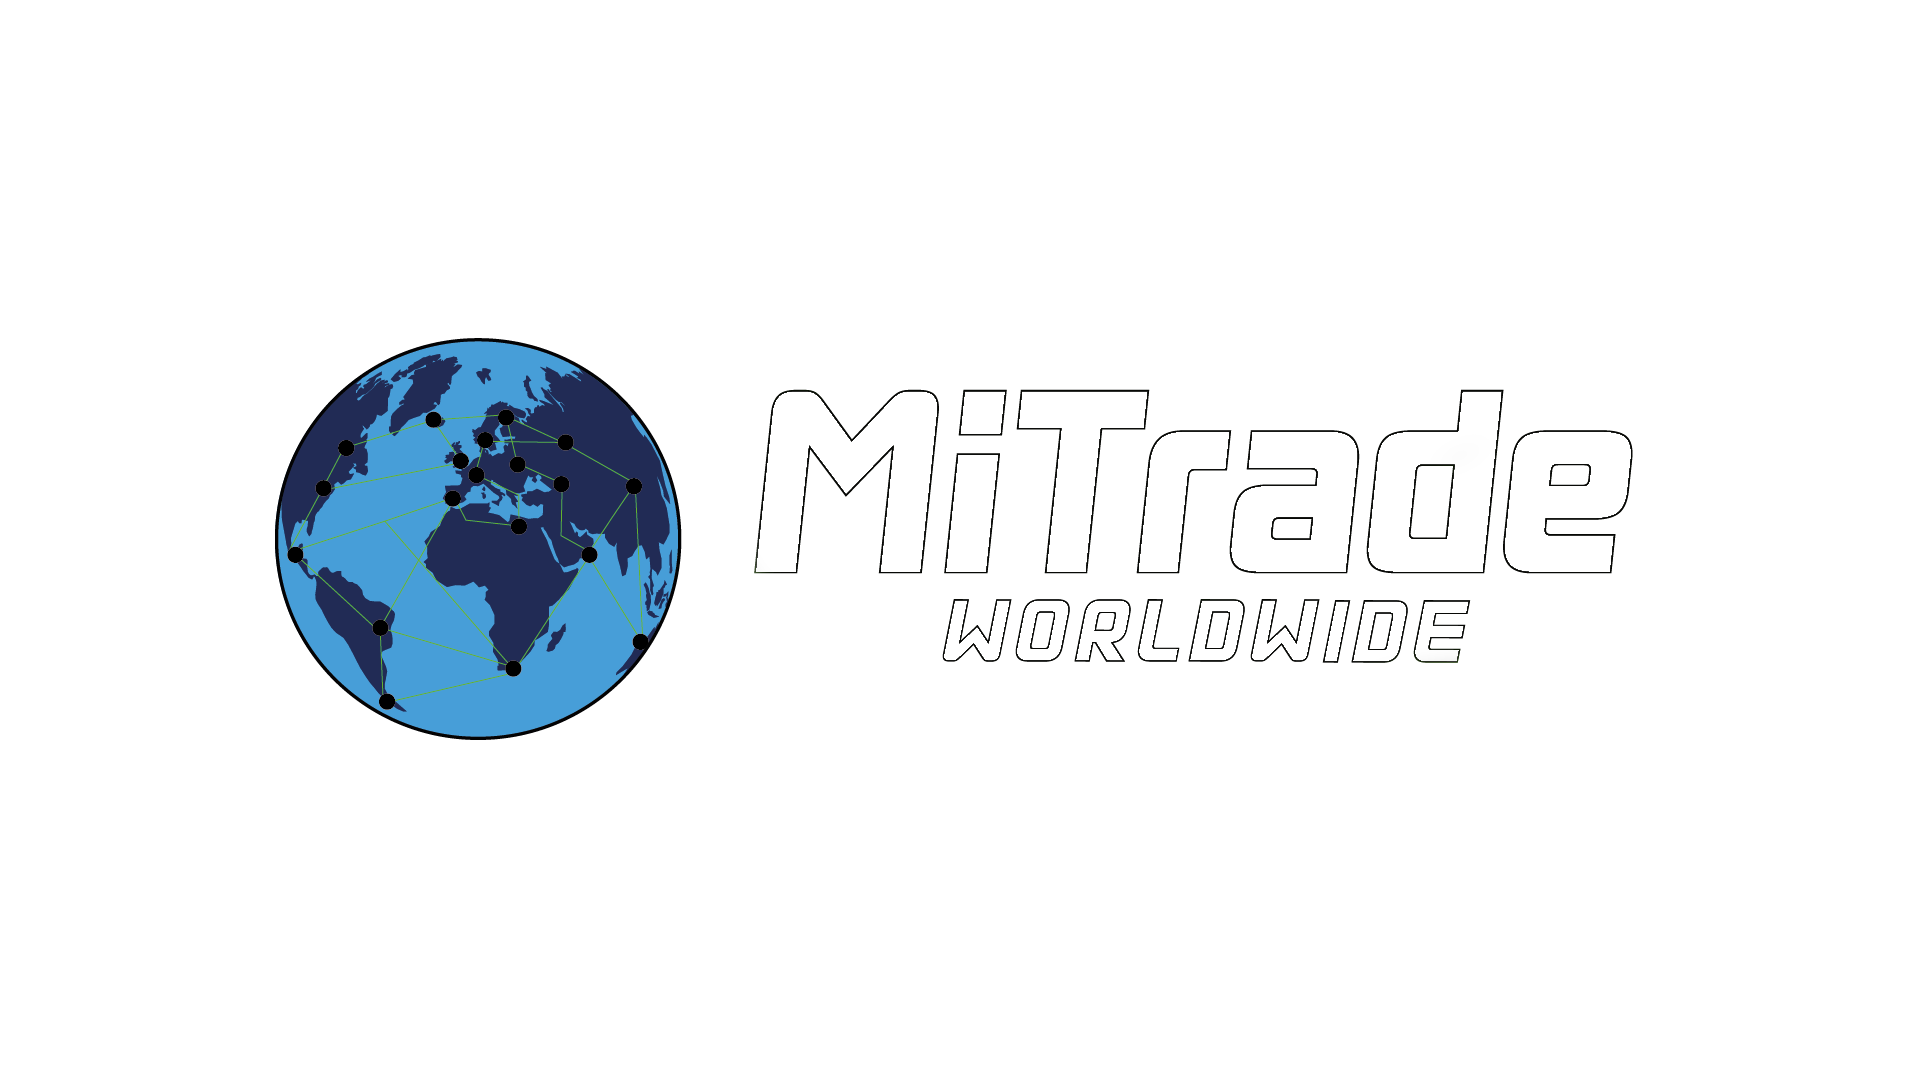 MiTrade Worldwide